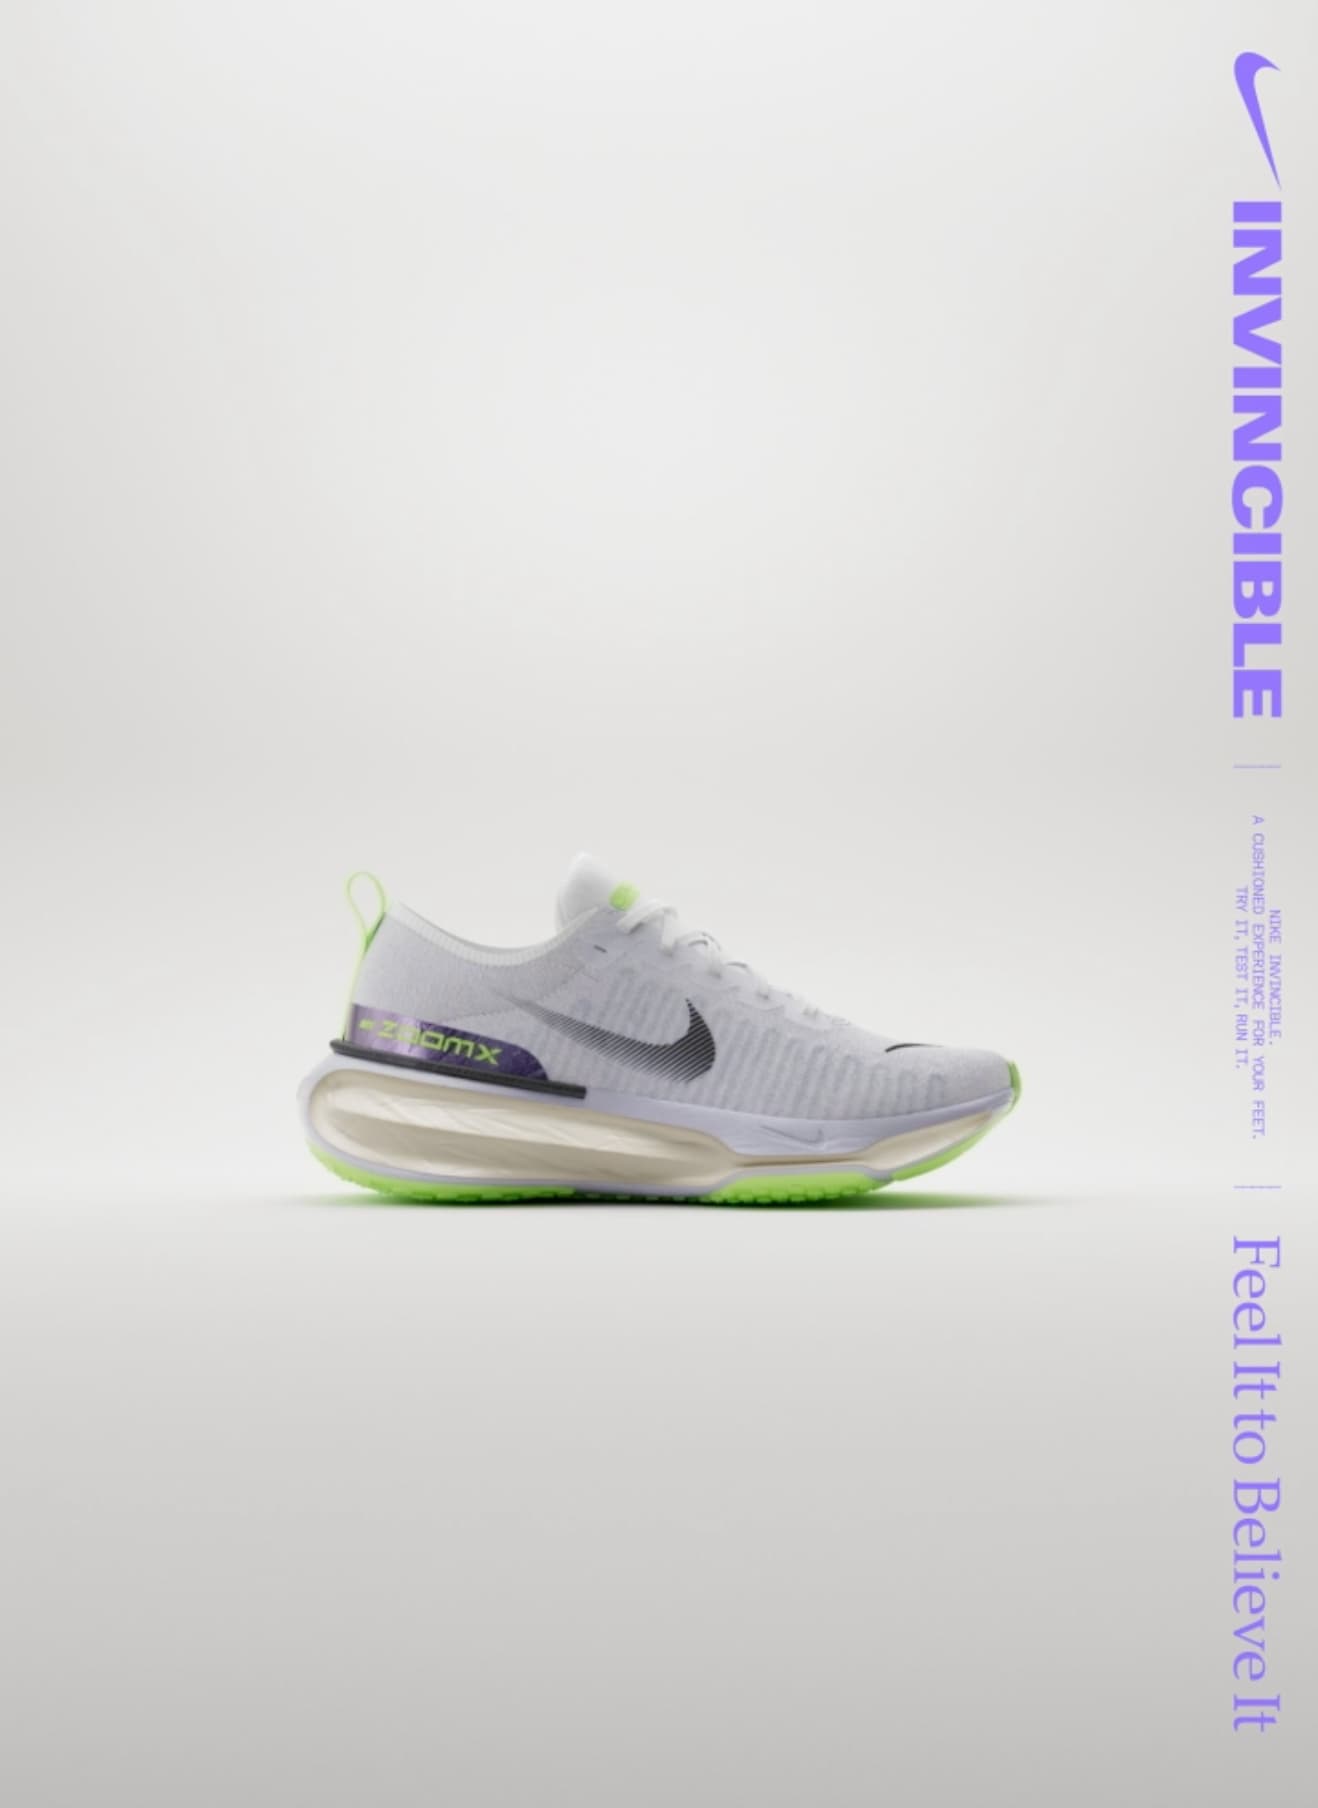 Maniobra Perímetro Museo Site oficial de Nike. Nike ES